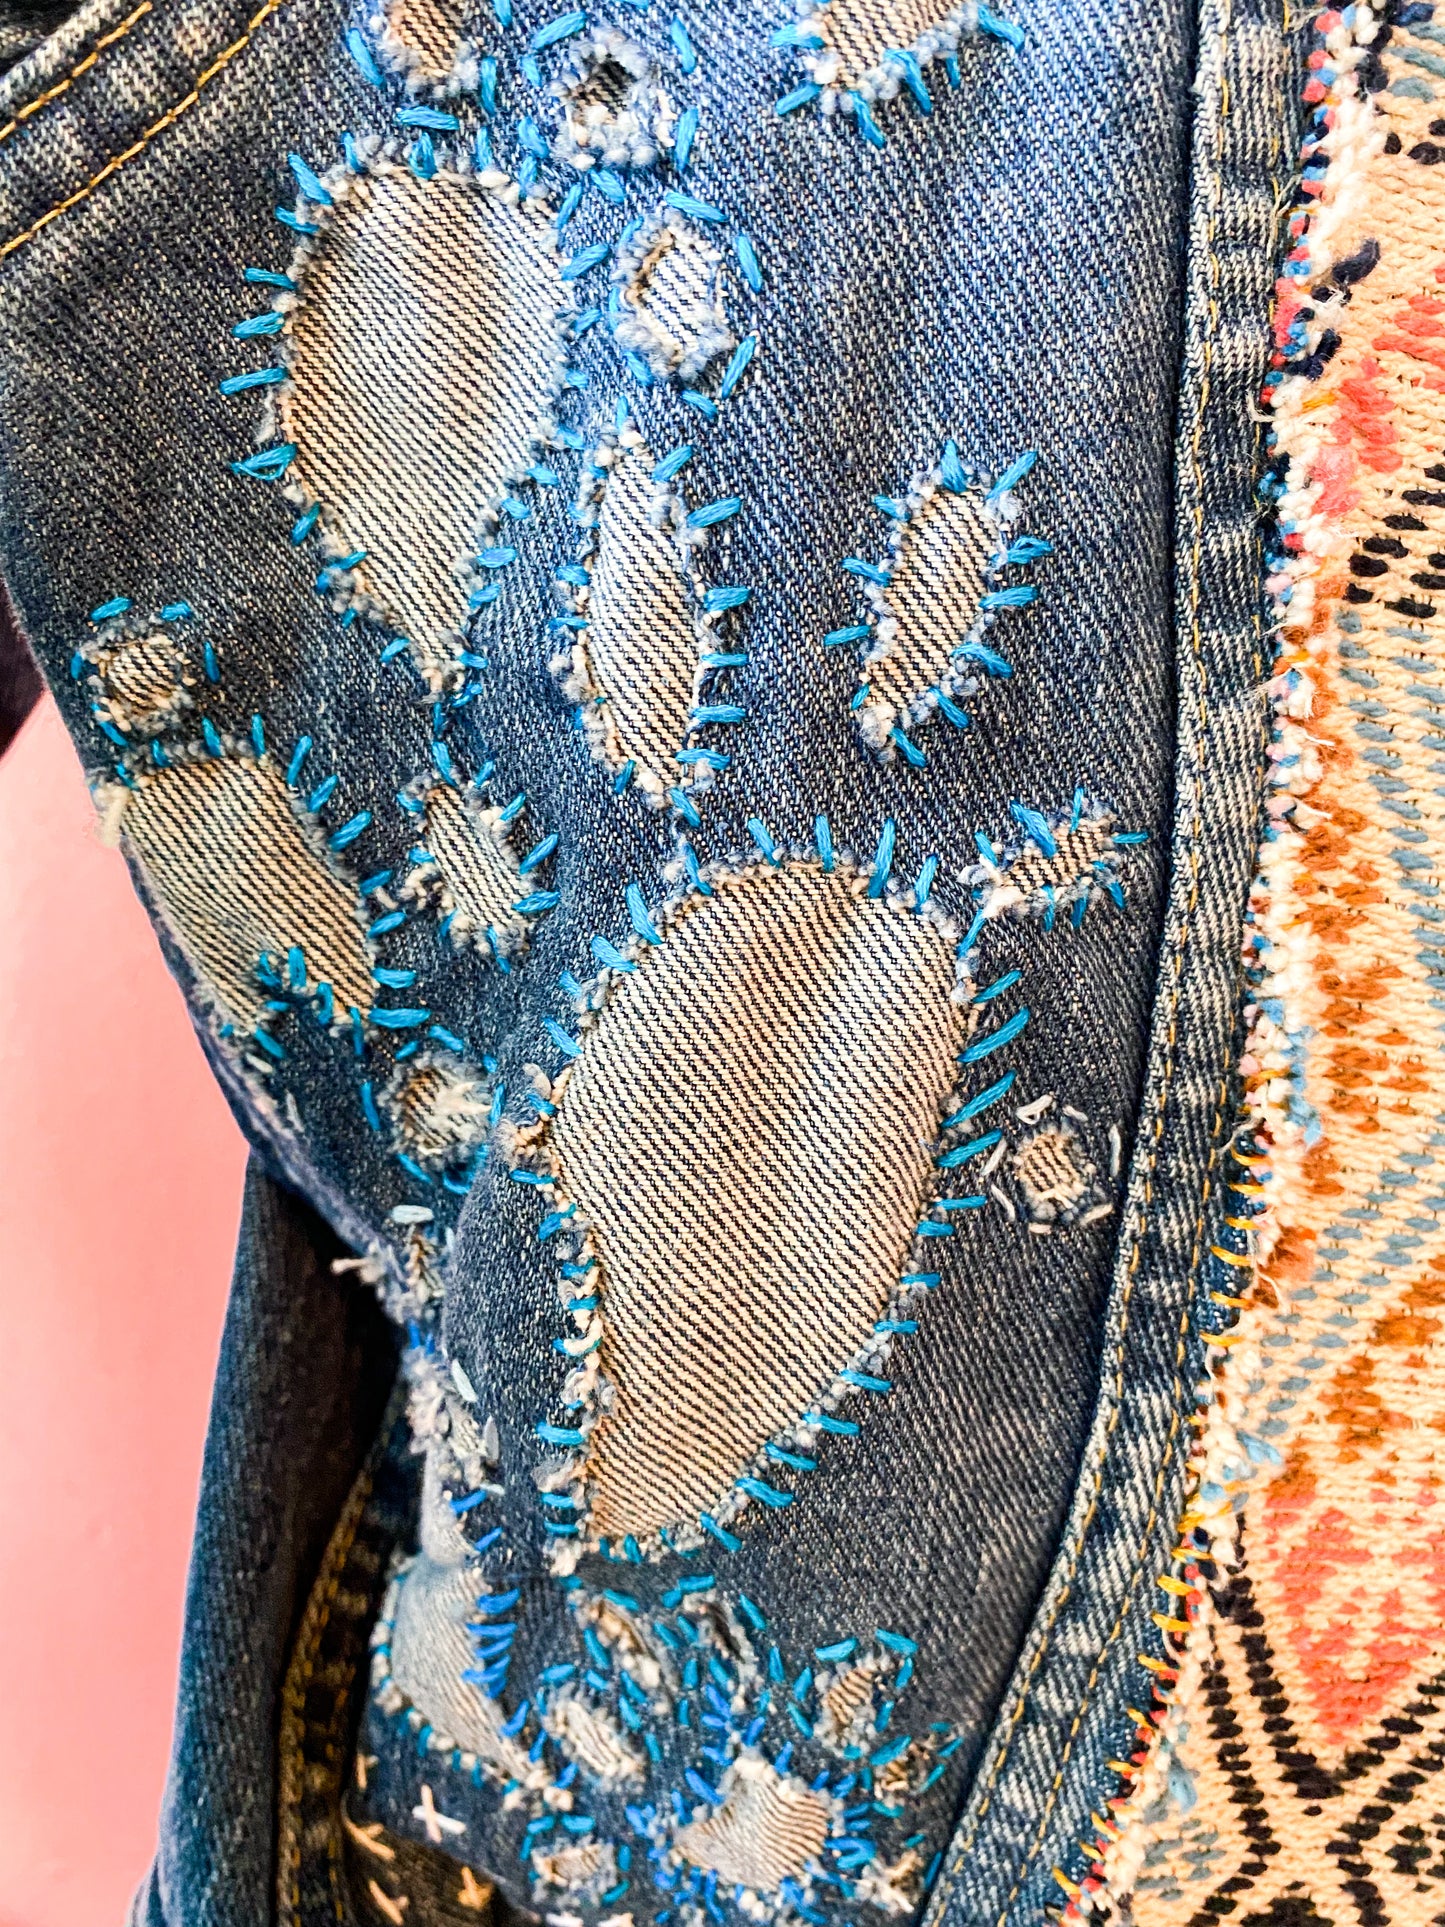 Bohemian upcycled embroidered denim jacket